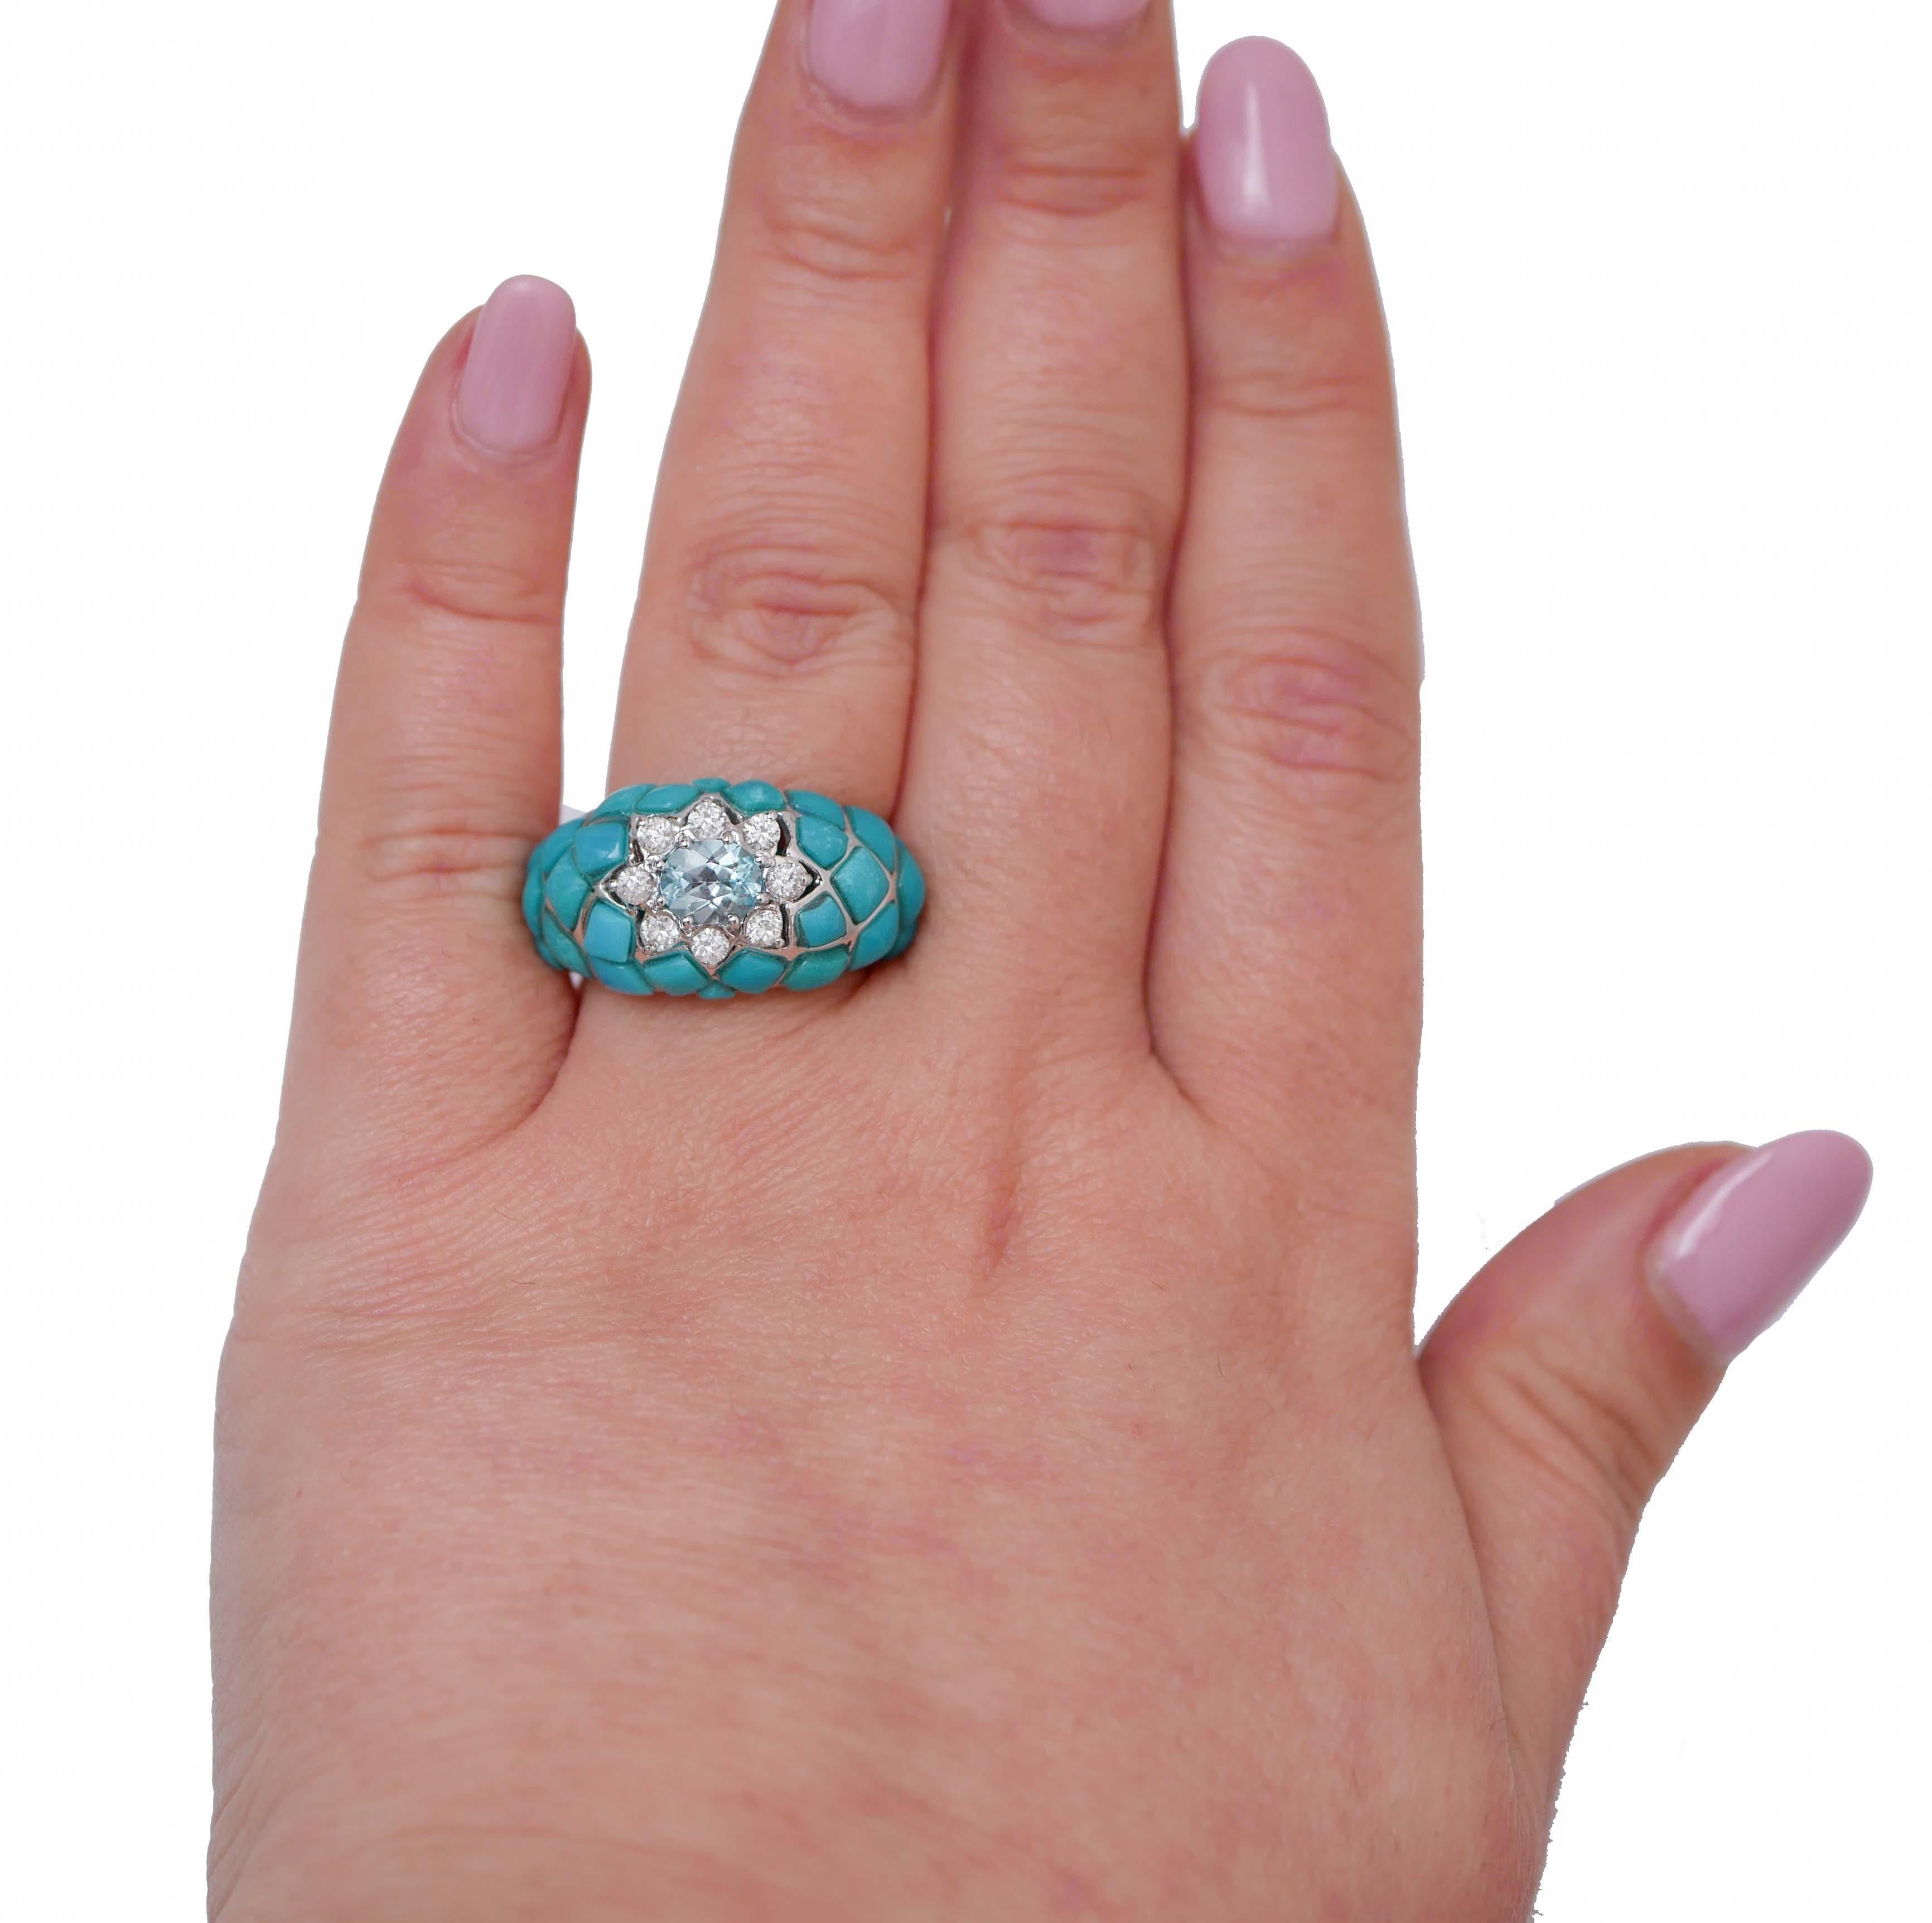 Mixed Cut Aquamarine Colour Topaz, Diamonds, Turquoise, 18 Karat White Gold Ring. For Sale